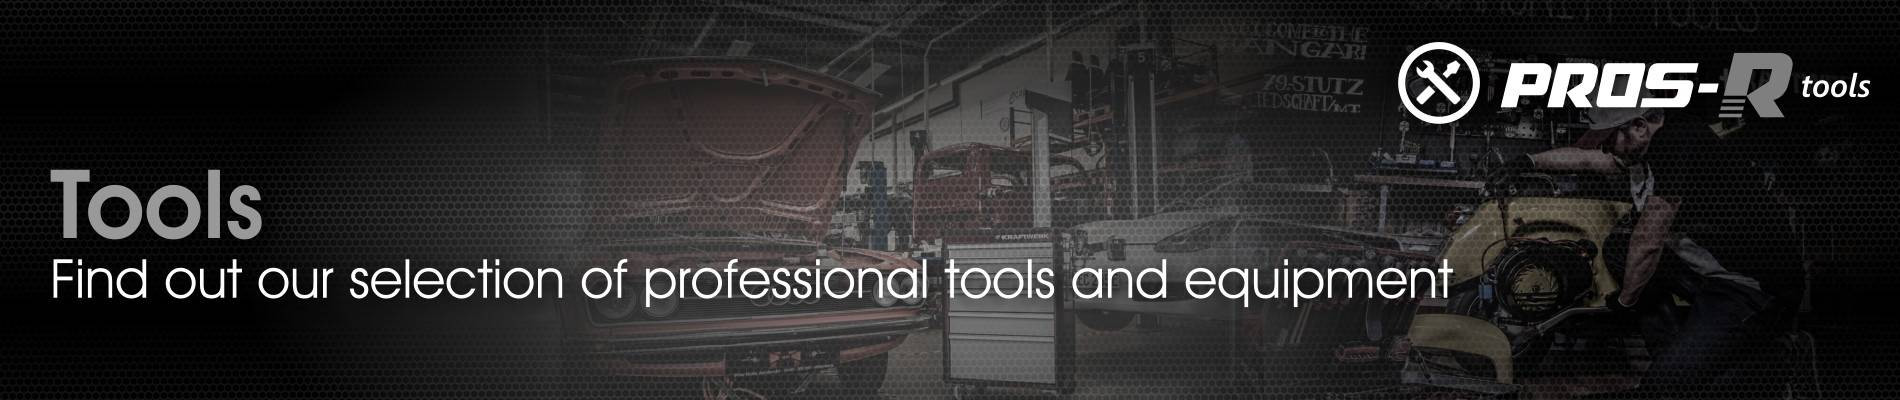 PROS-R tools